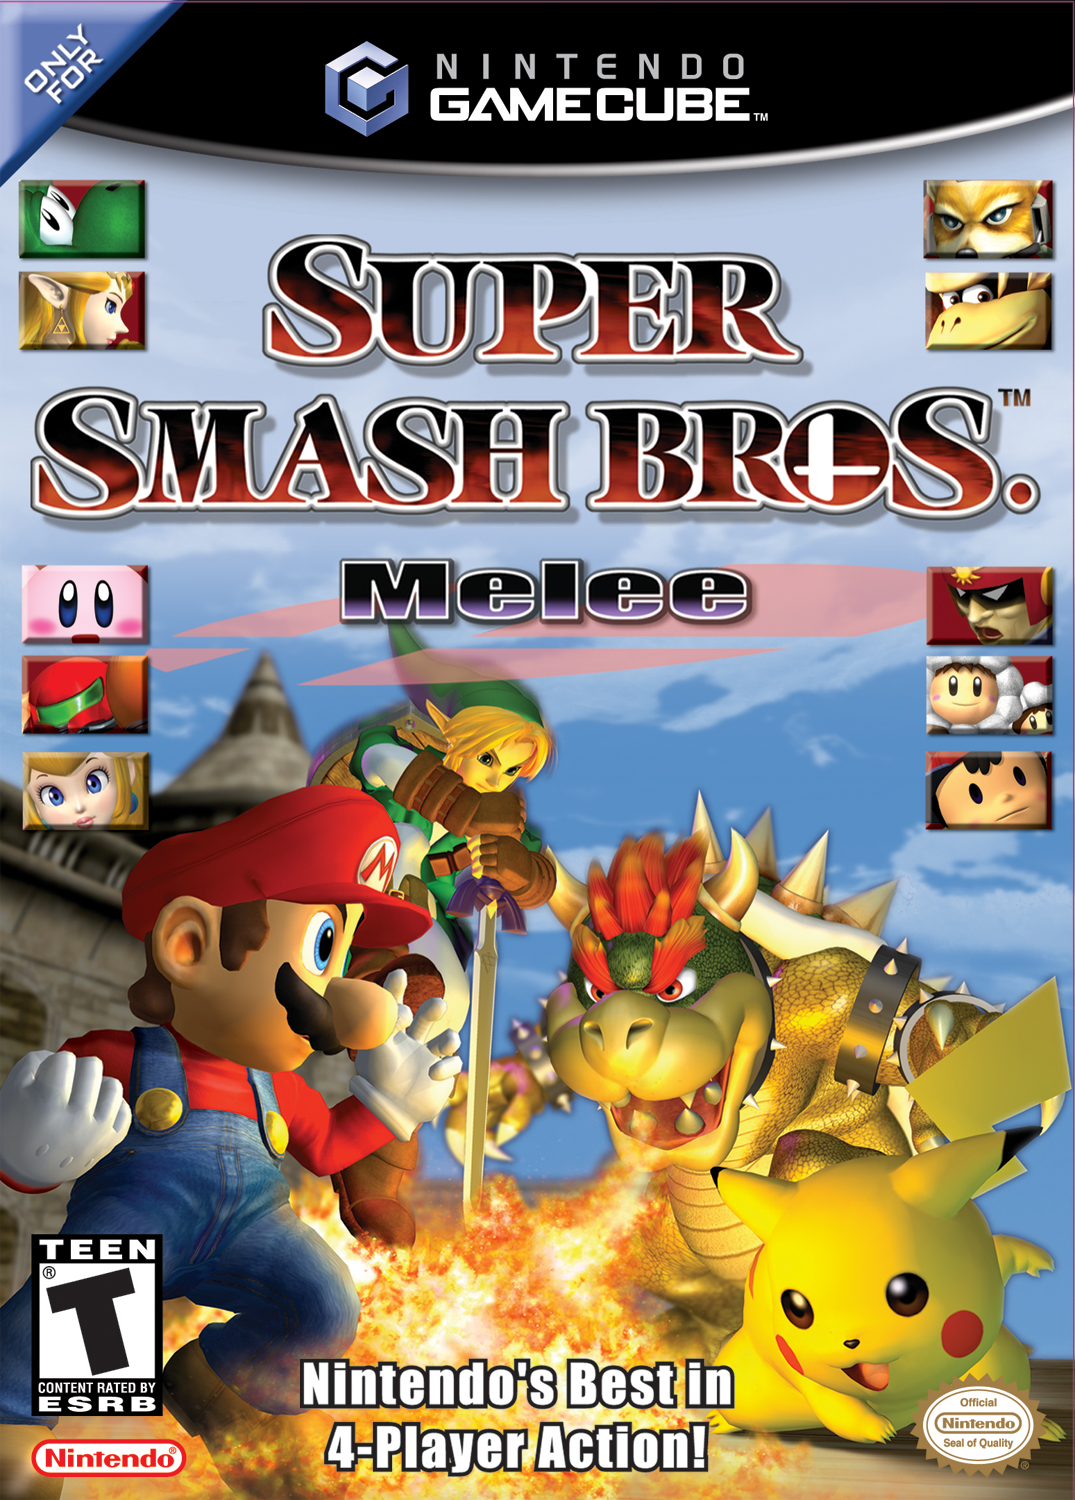 Super Smash Bros Melee for gamecube screenshot